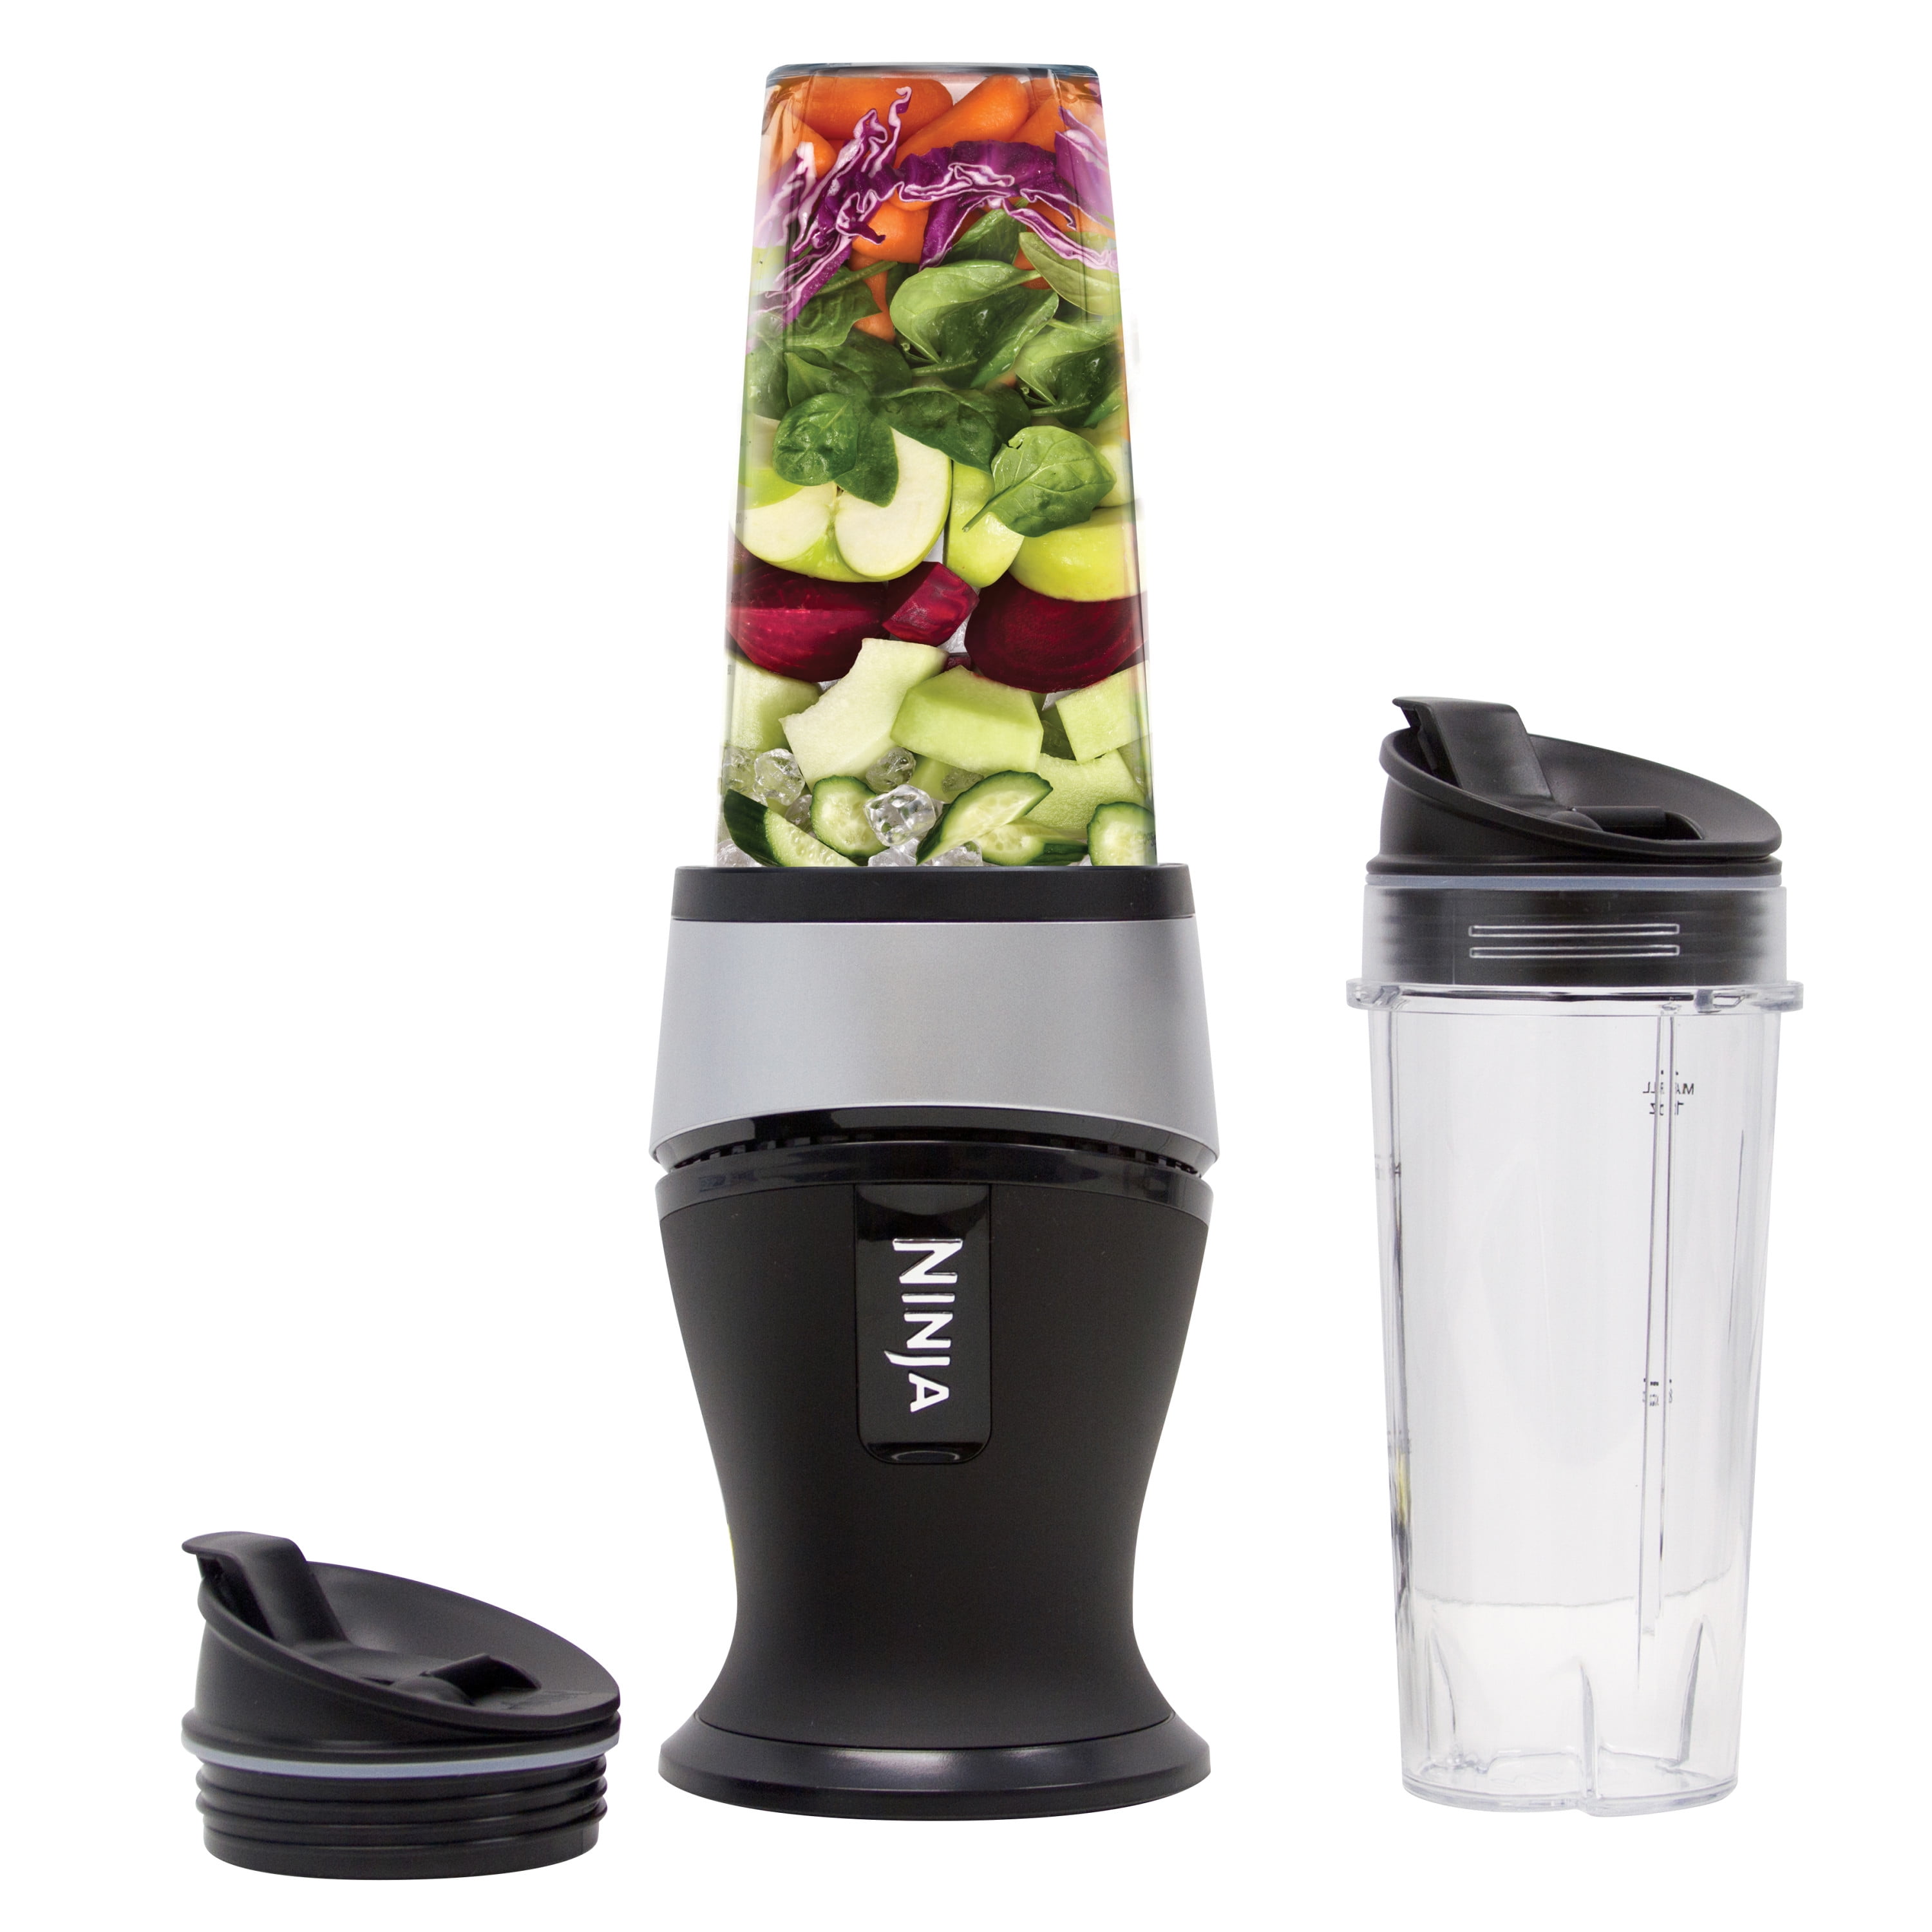 Suggested Product: Nutri Ninja Blender • INTEGRE8T Wellness